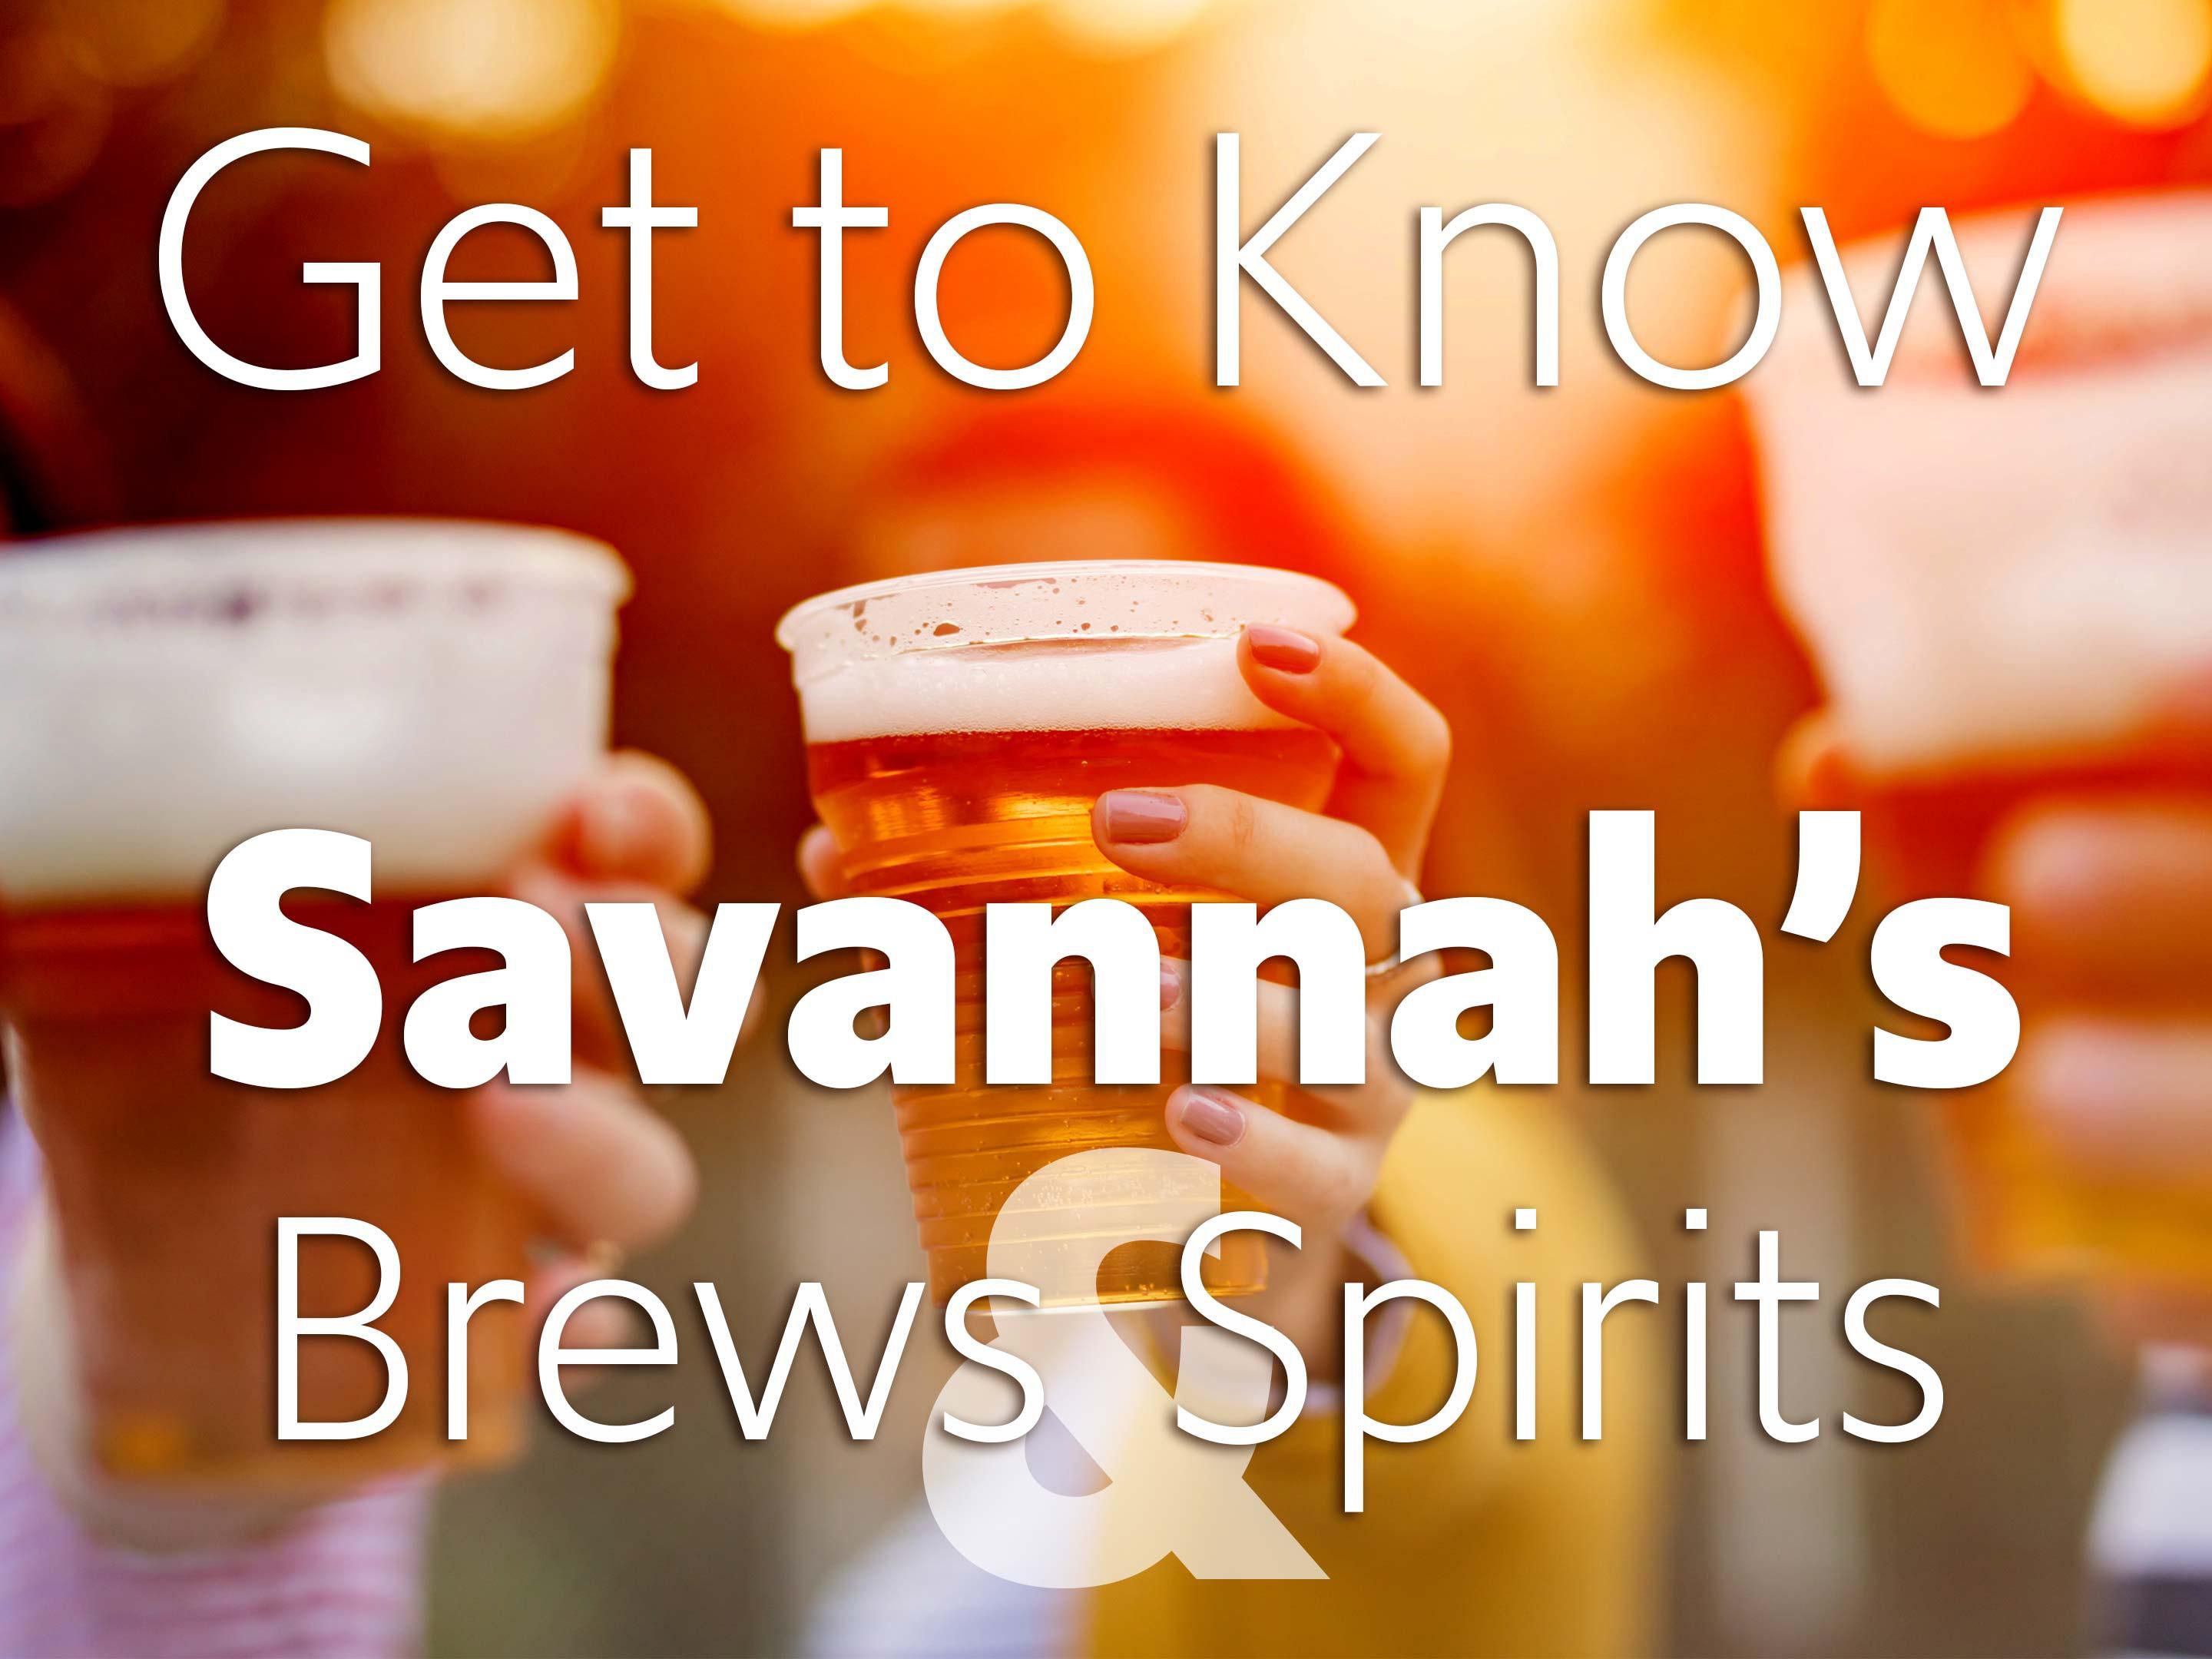 Meet Savannah's Brews & Spirits